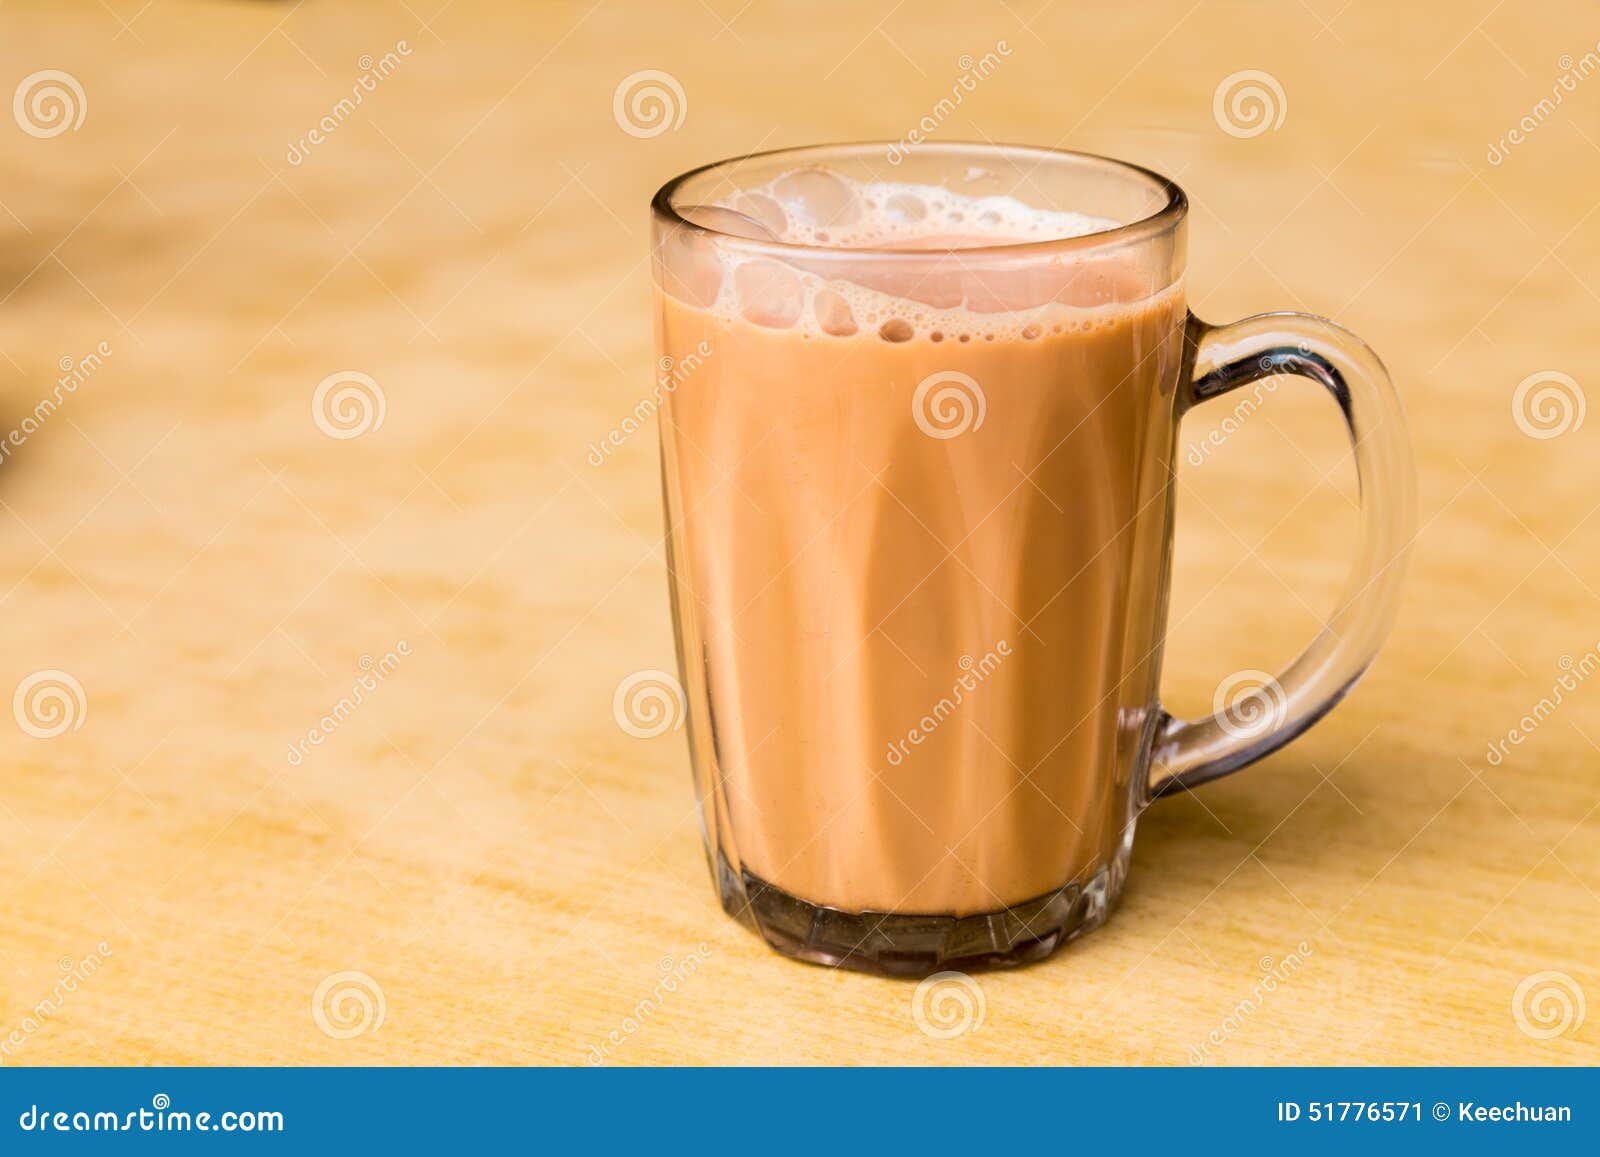 tea with milk or popularly known as teh tarik in malaysia